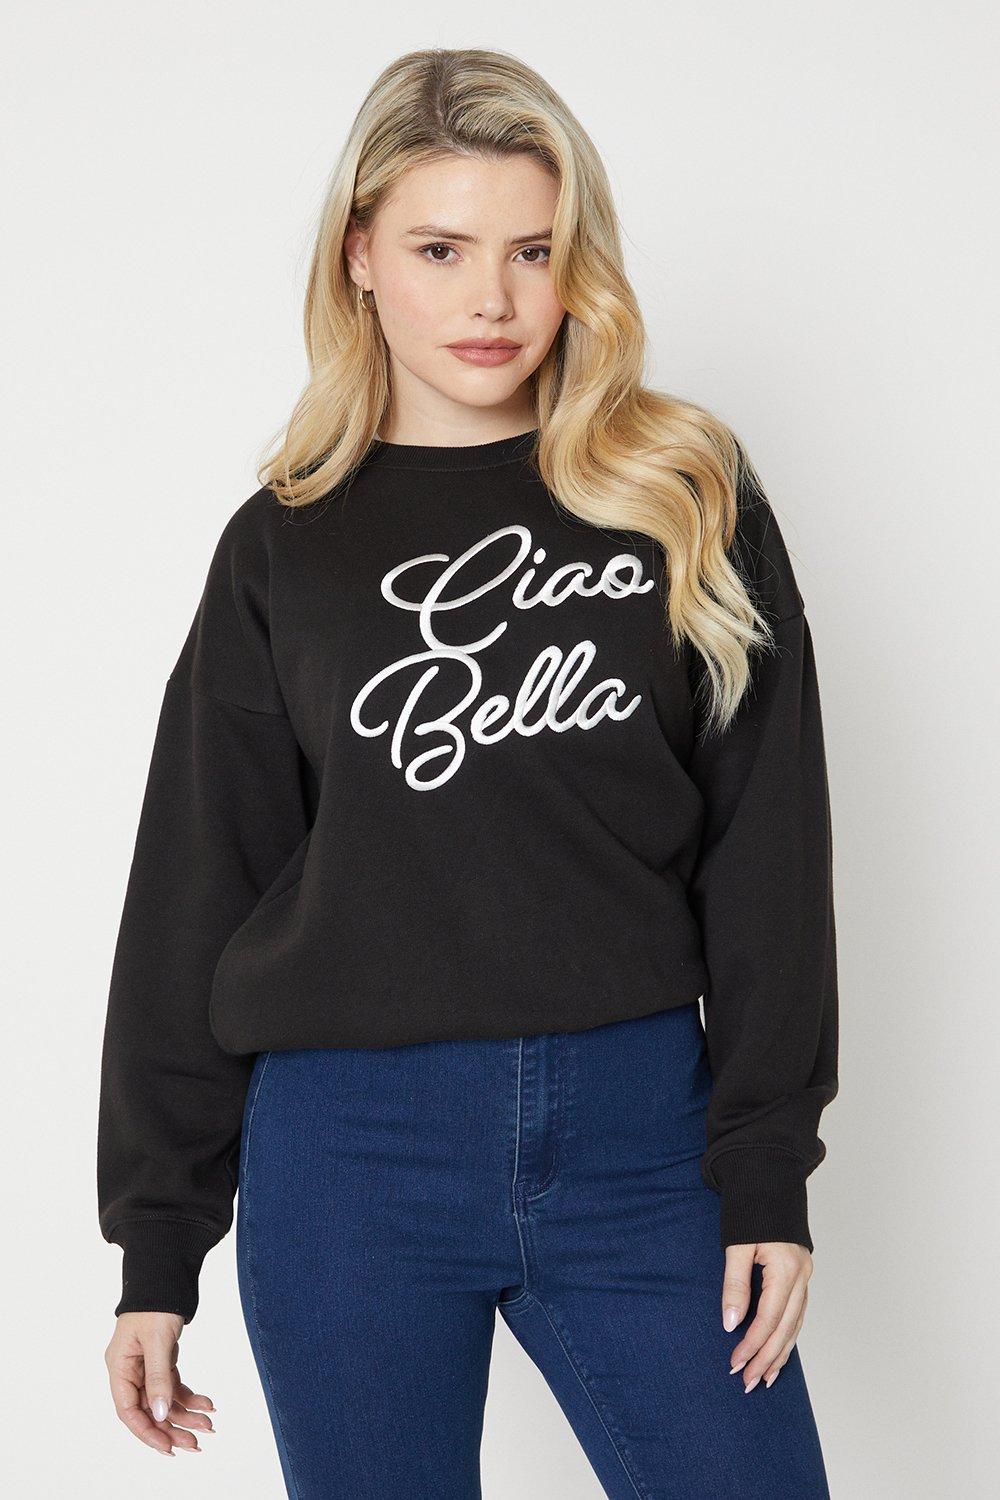 Women’s Ciao Bella Sweatshirt - black - L